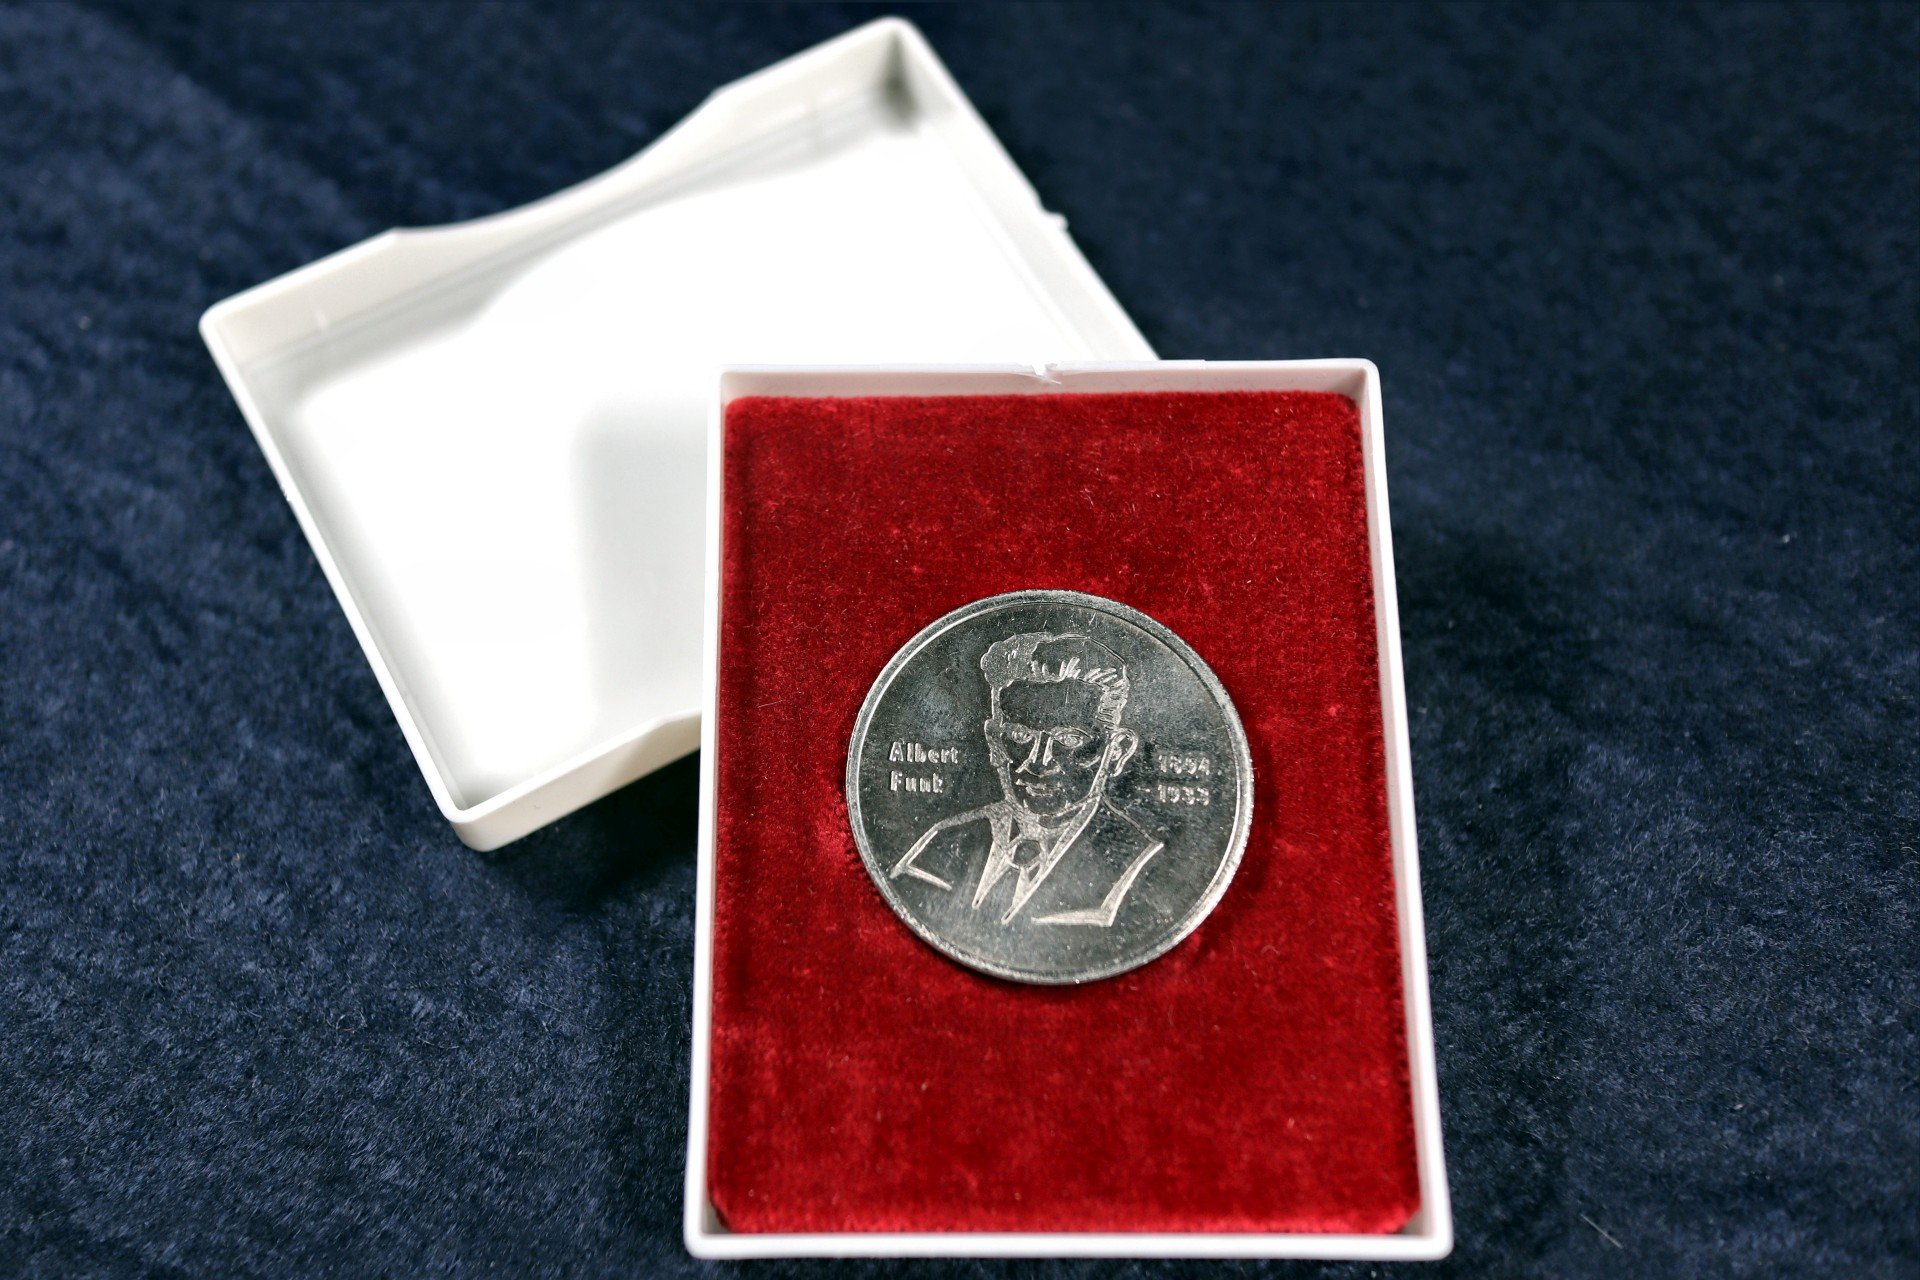 Medaille "Albert Funk 1894-1933" (Saxonia-Freiberg-Stiftung CC BY-NC-SA)